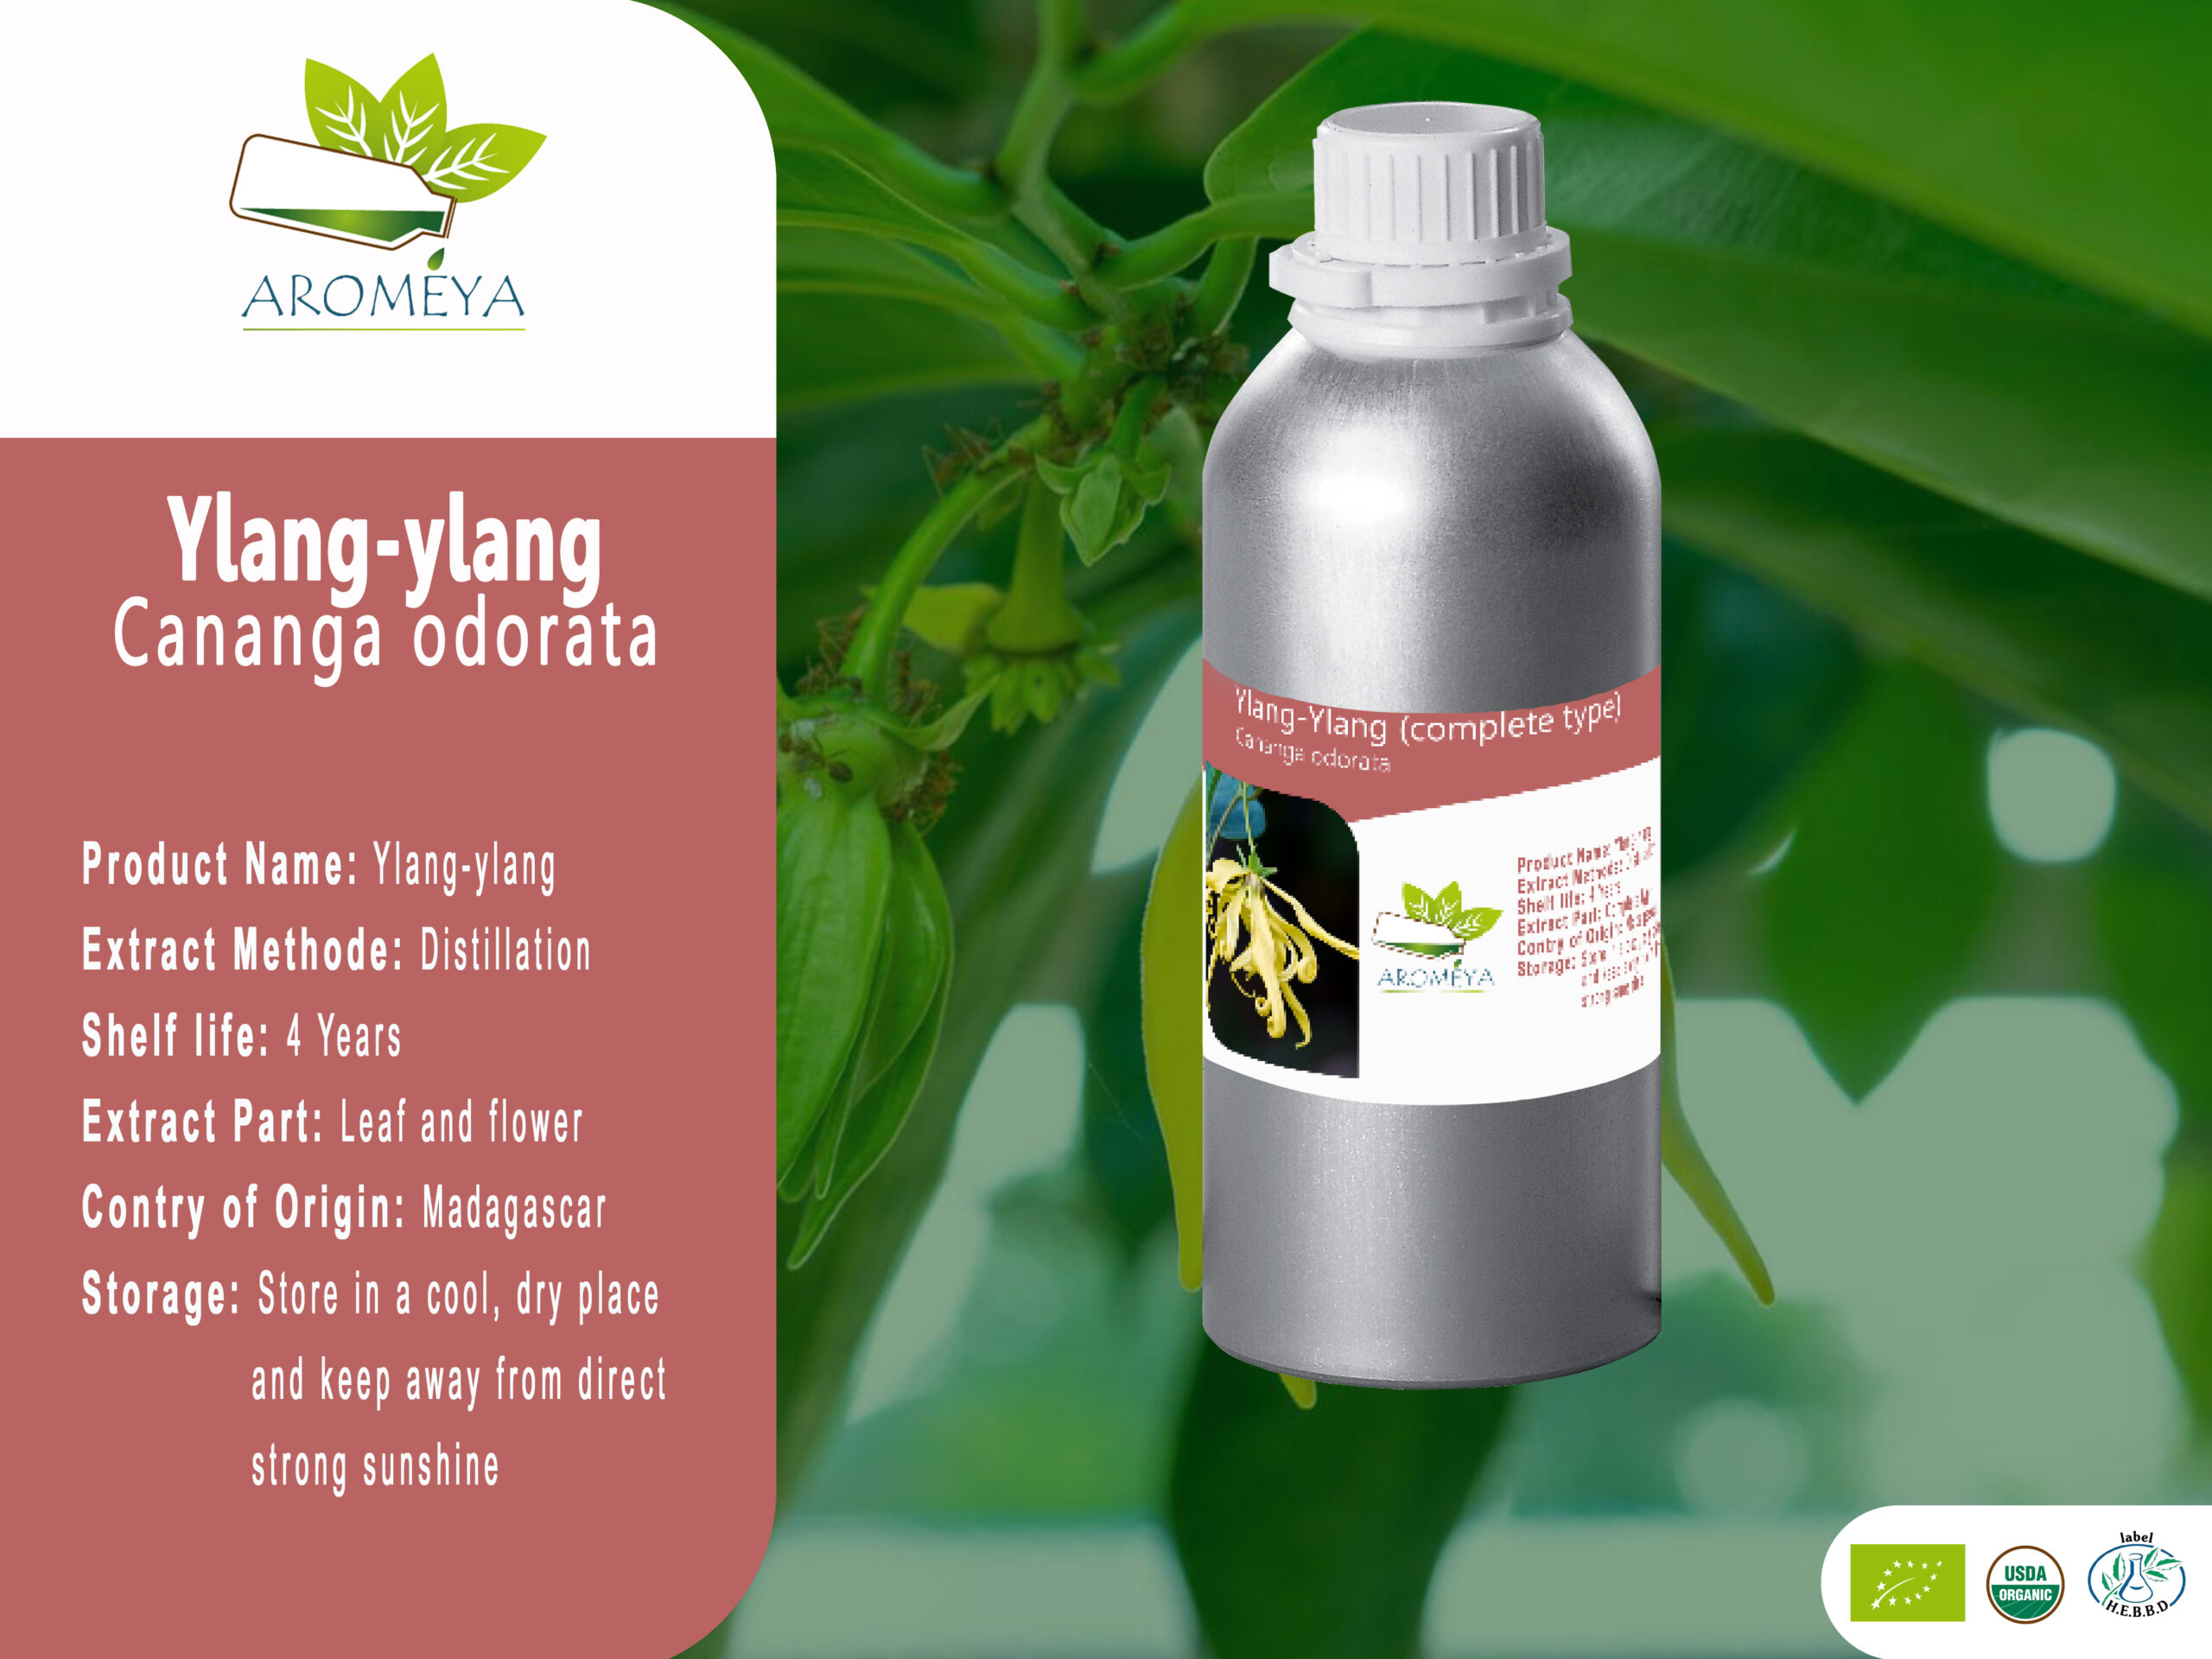 Huile essentielle d' Ylang-Ylang (Grade complete) // Ylang-Ylang (Grade complete) essential oil from Madagascar